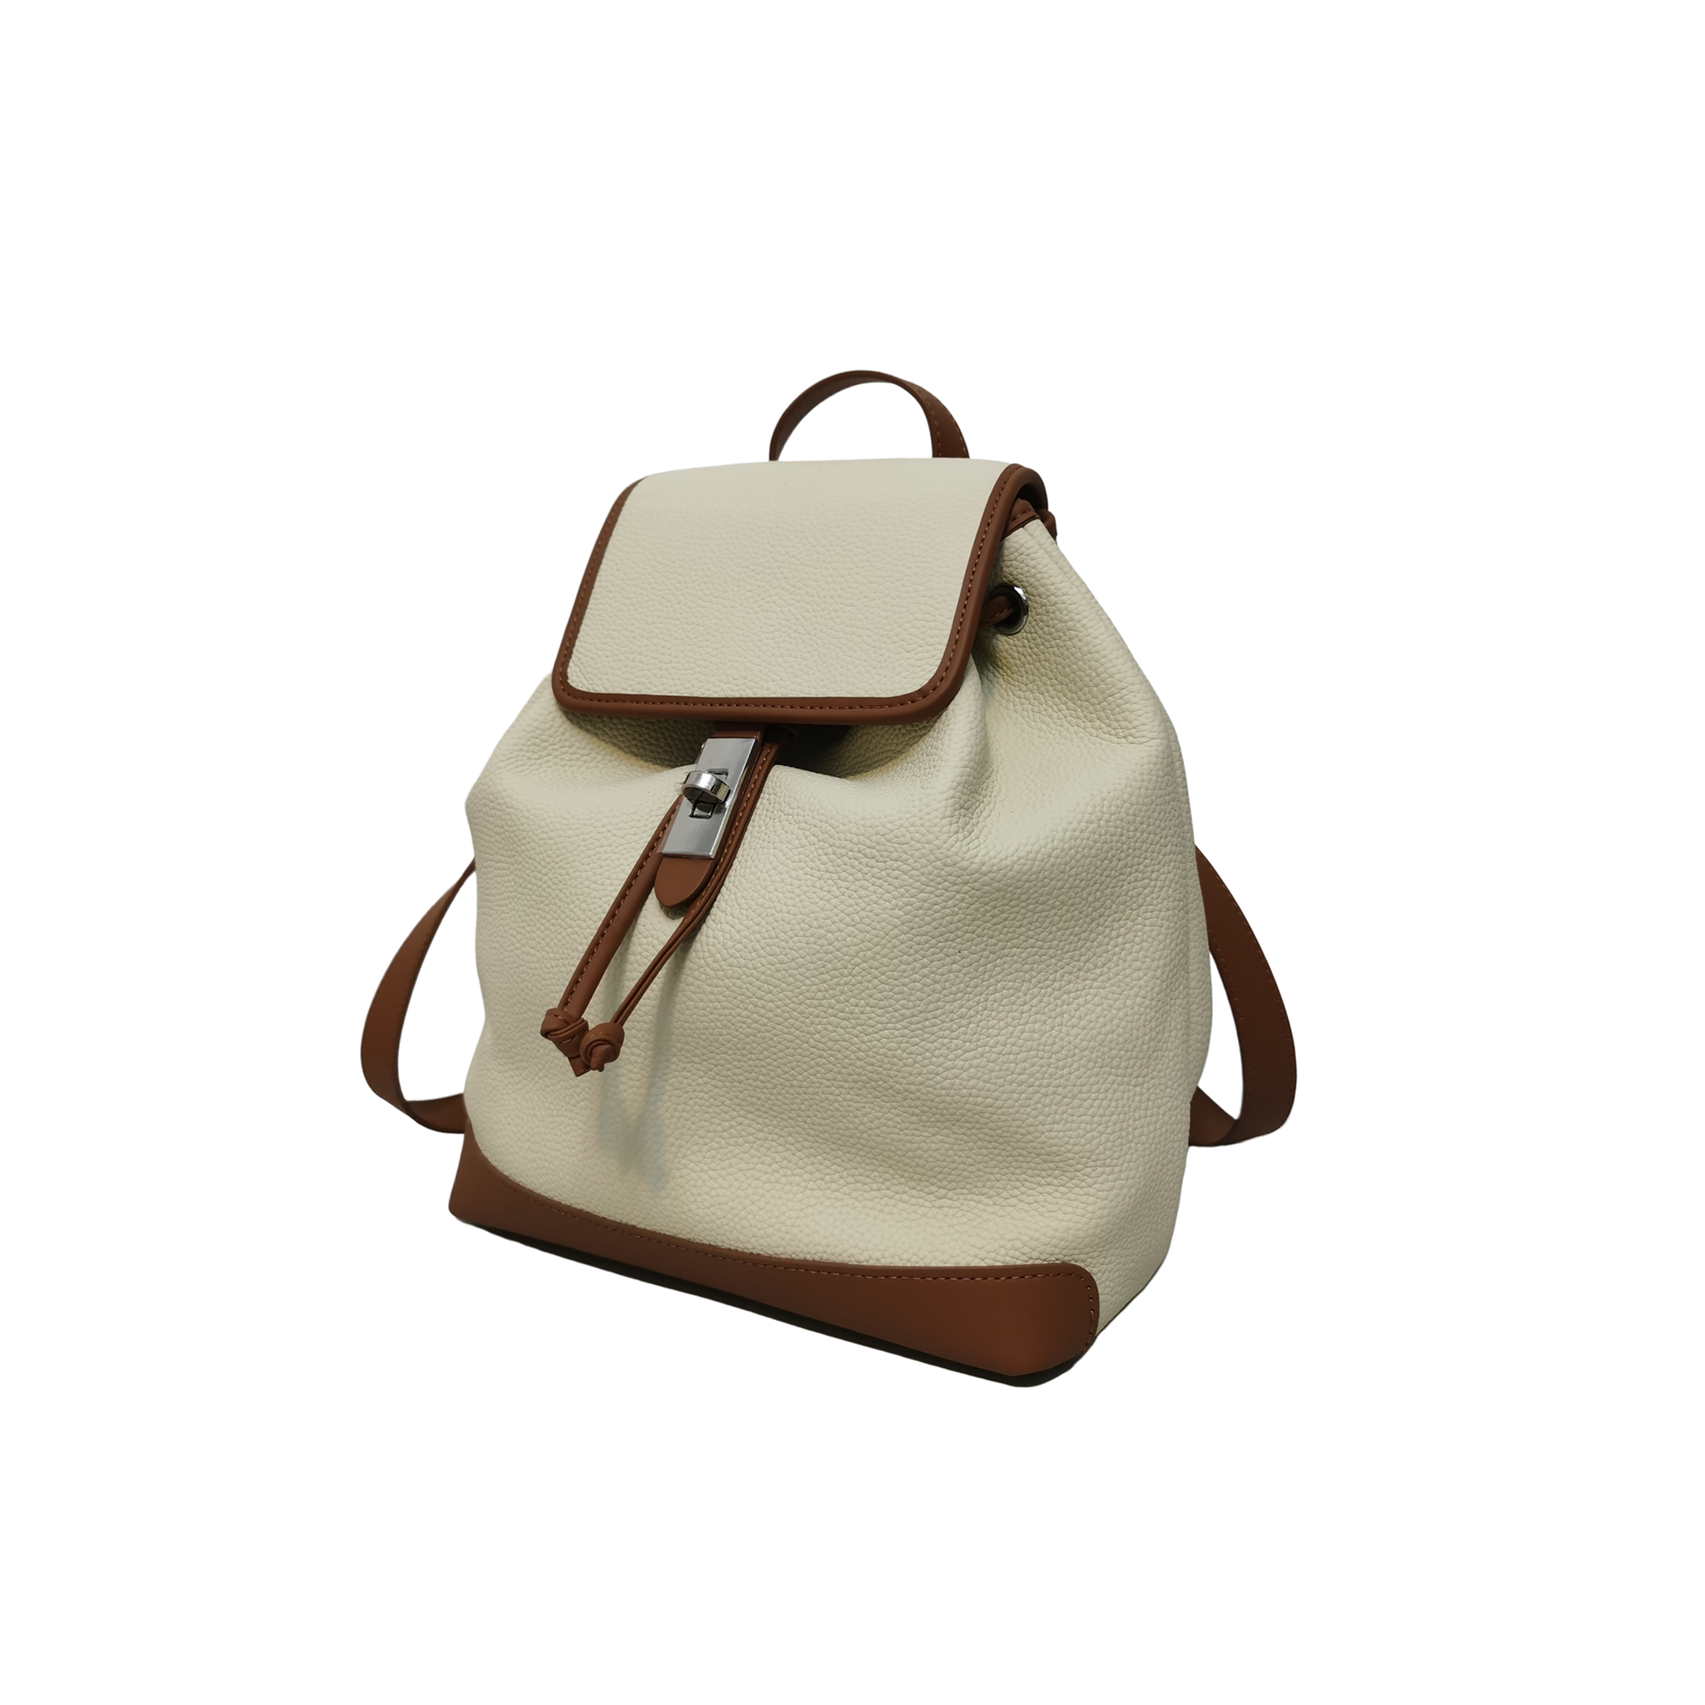 Women's leather backpack zaino design by Tomorrow Closet